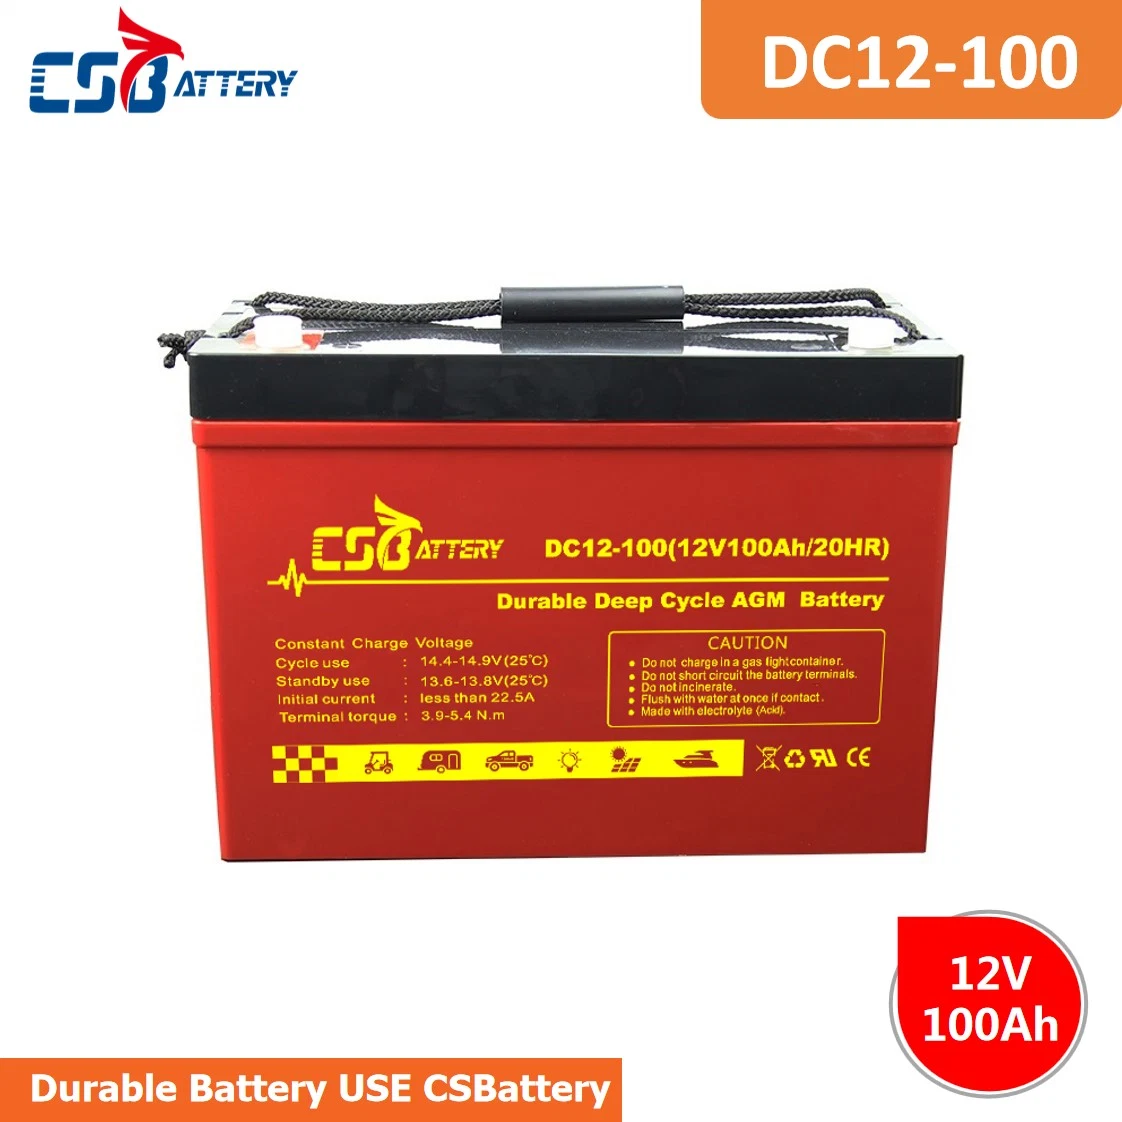 Csbattery 12V 100ah CE/ISO/UL Certificated VRLA Sunny Battery for UPS/Pump/Solar Powered-House-Monitor-System/Vs: Aokly/Narada/Csf